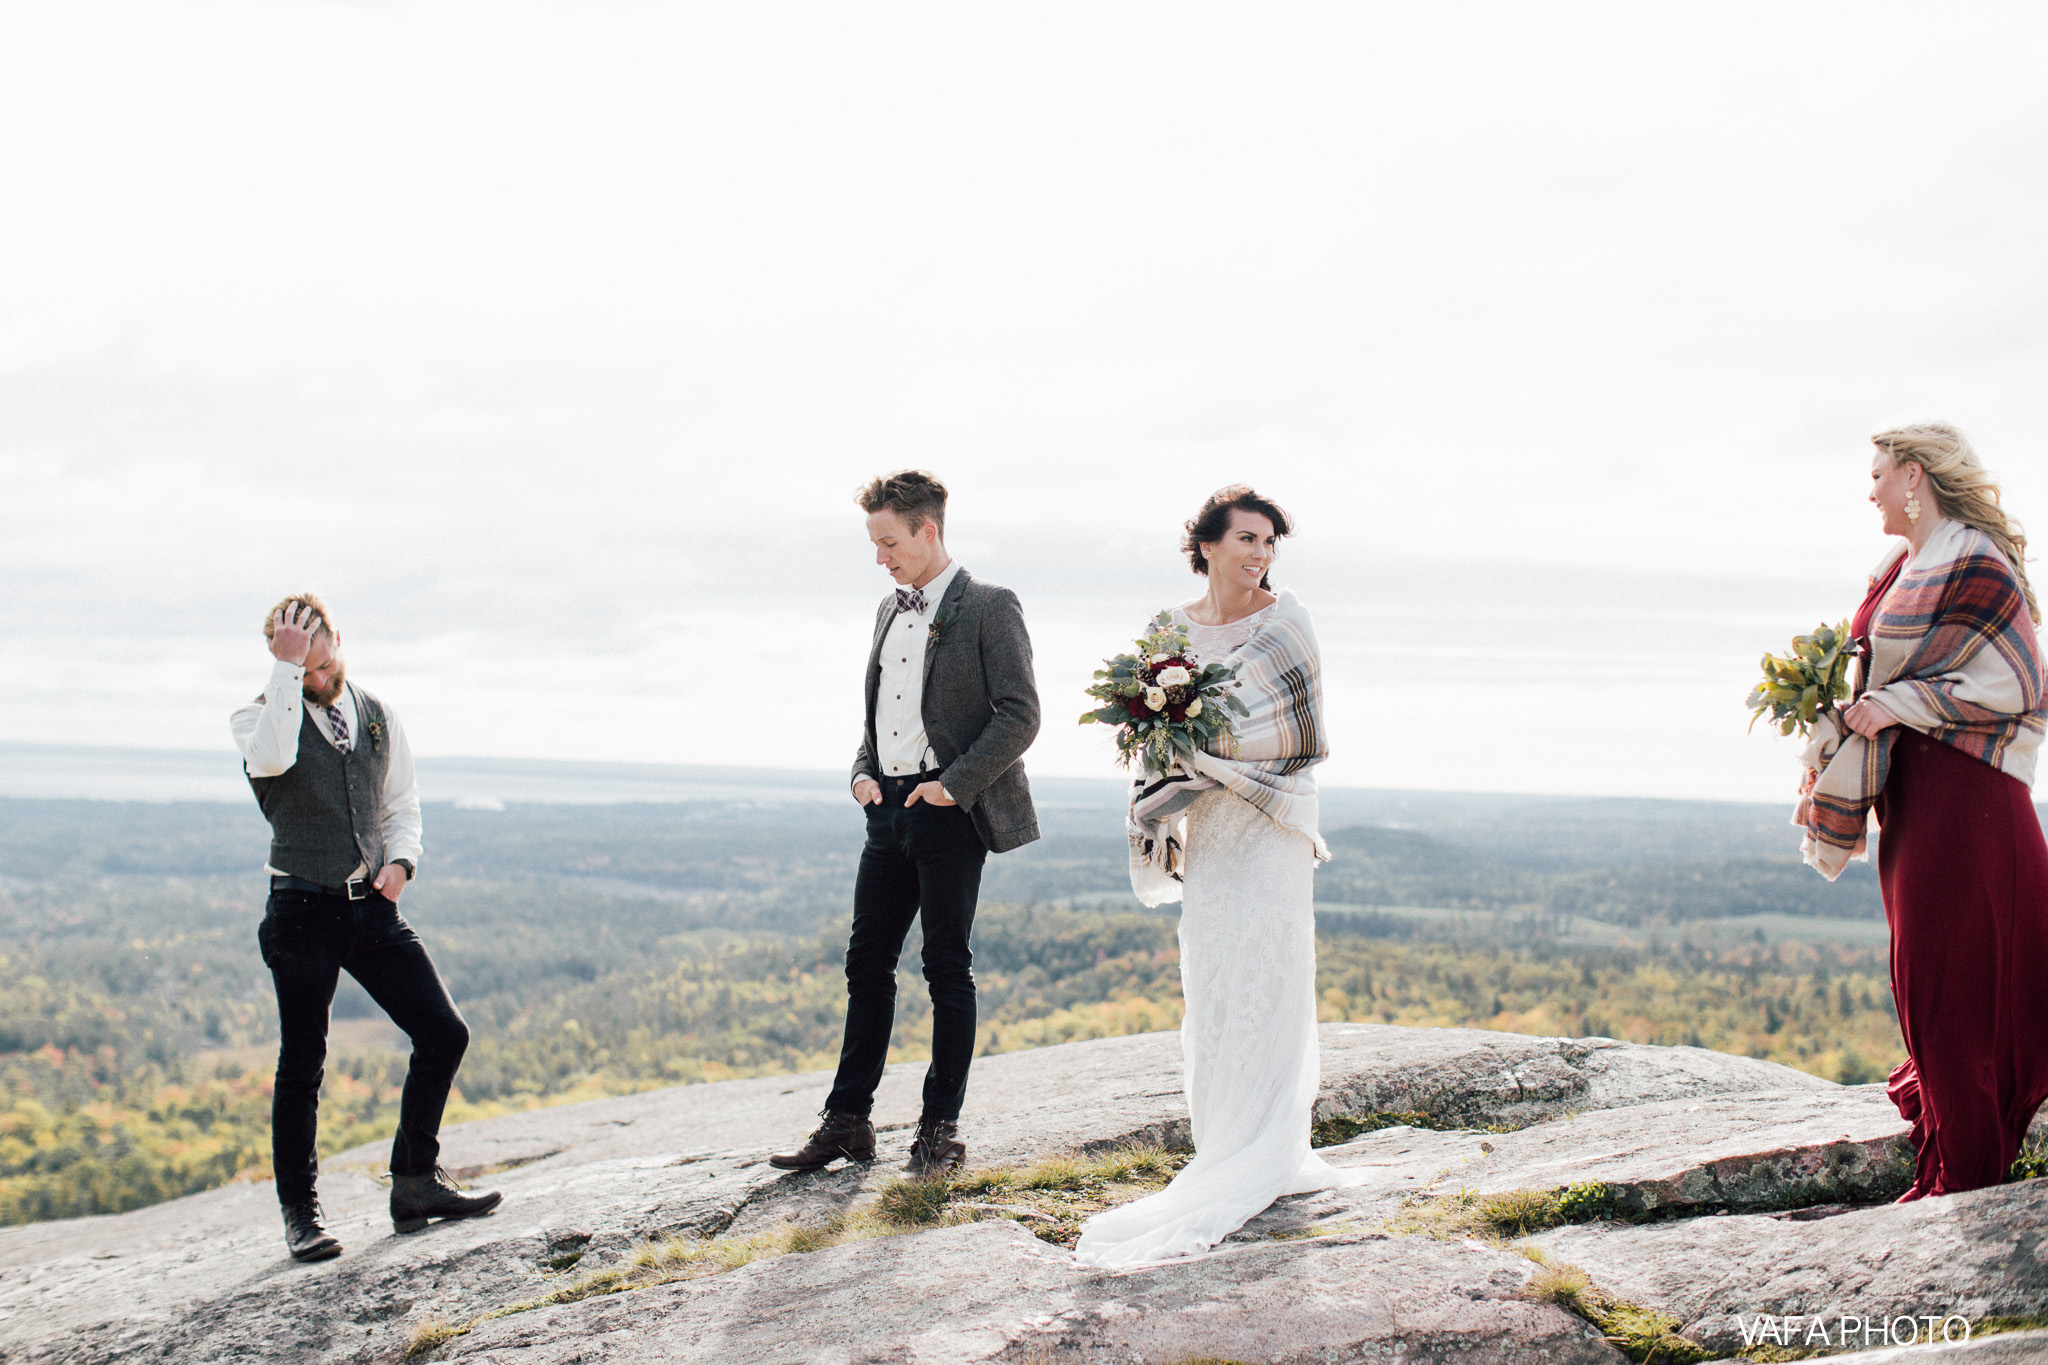 Hogback-Mountain-Wedding-Chelsea-Josh-Vafa-Photo-386.jpg